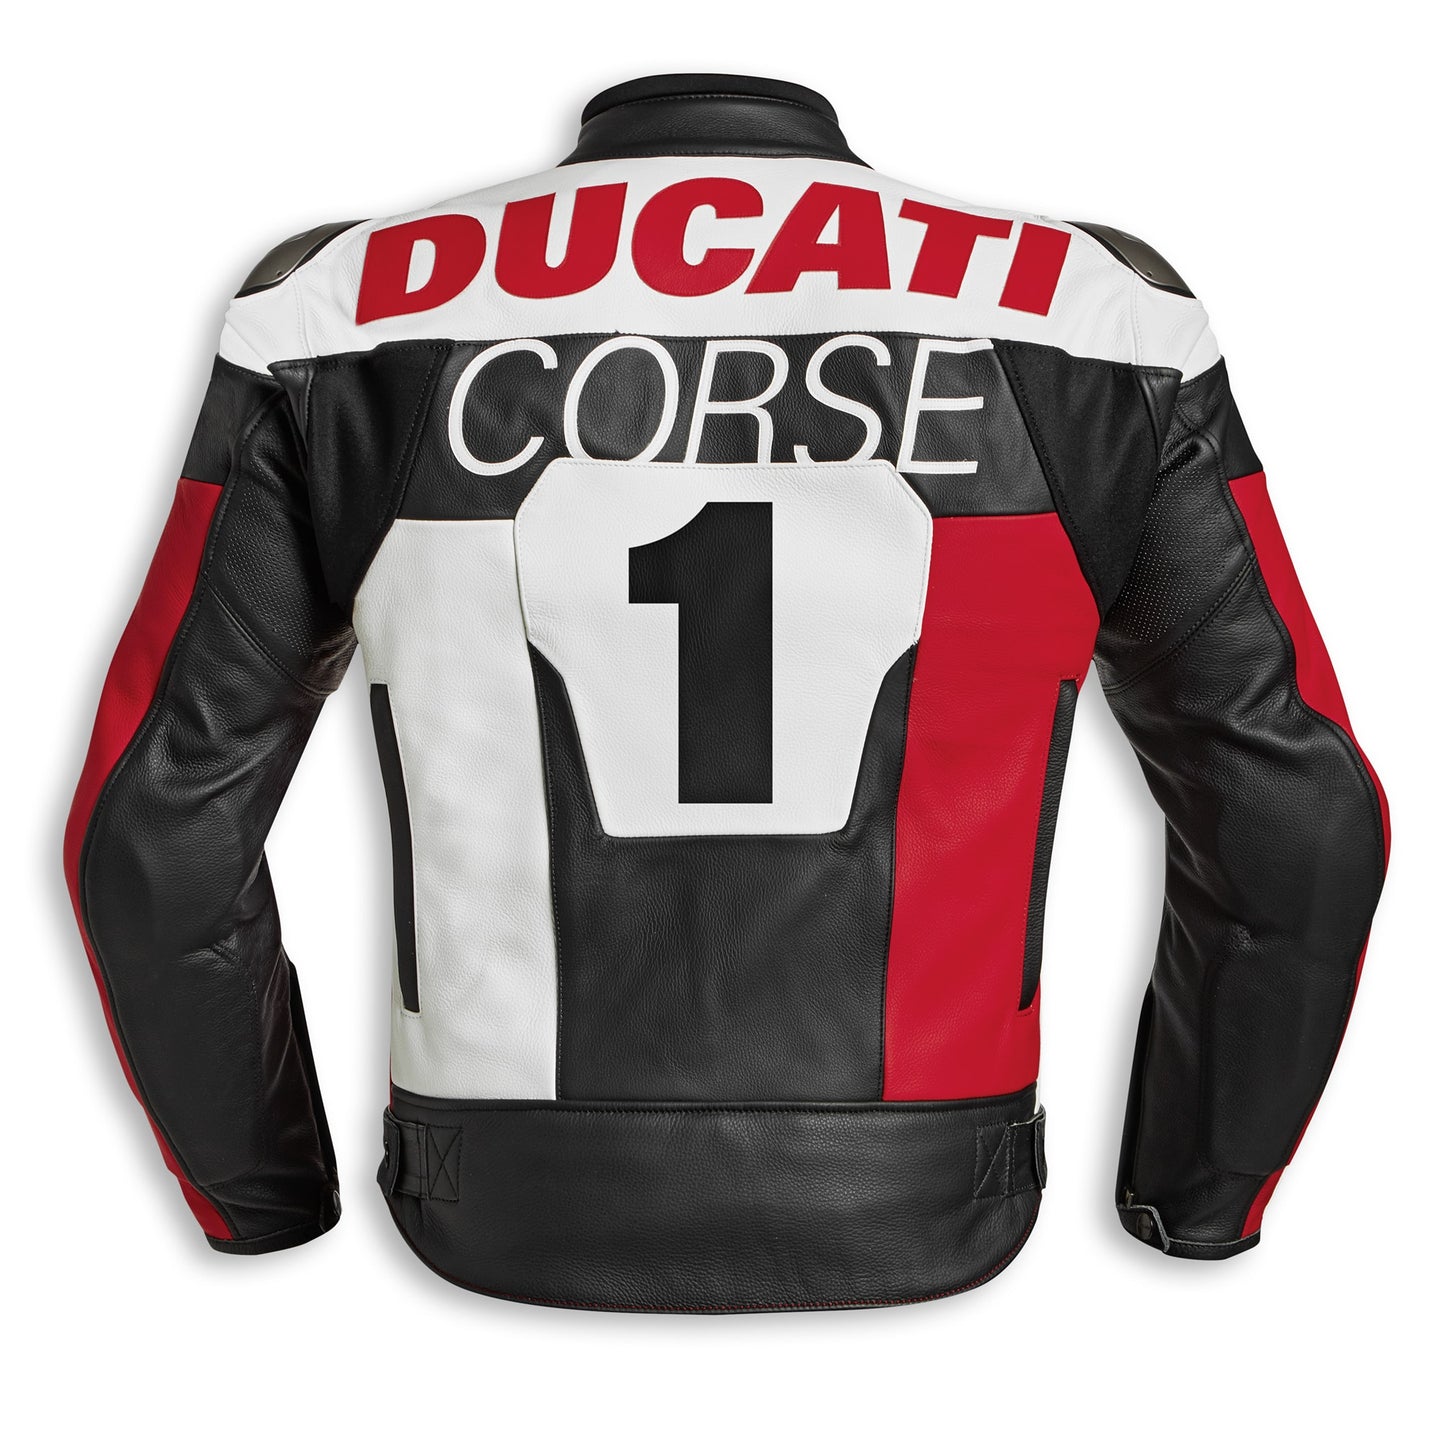 Ducati Corse C5 Leather Jacket